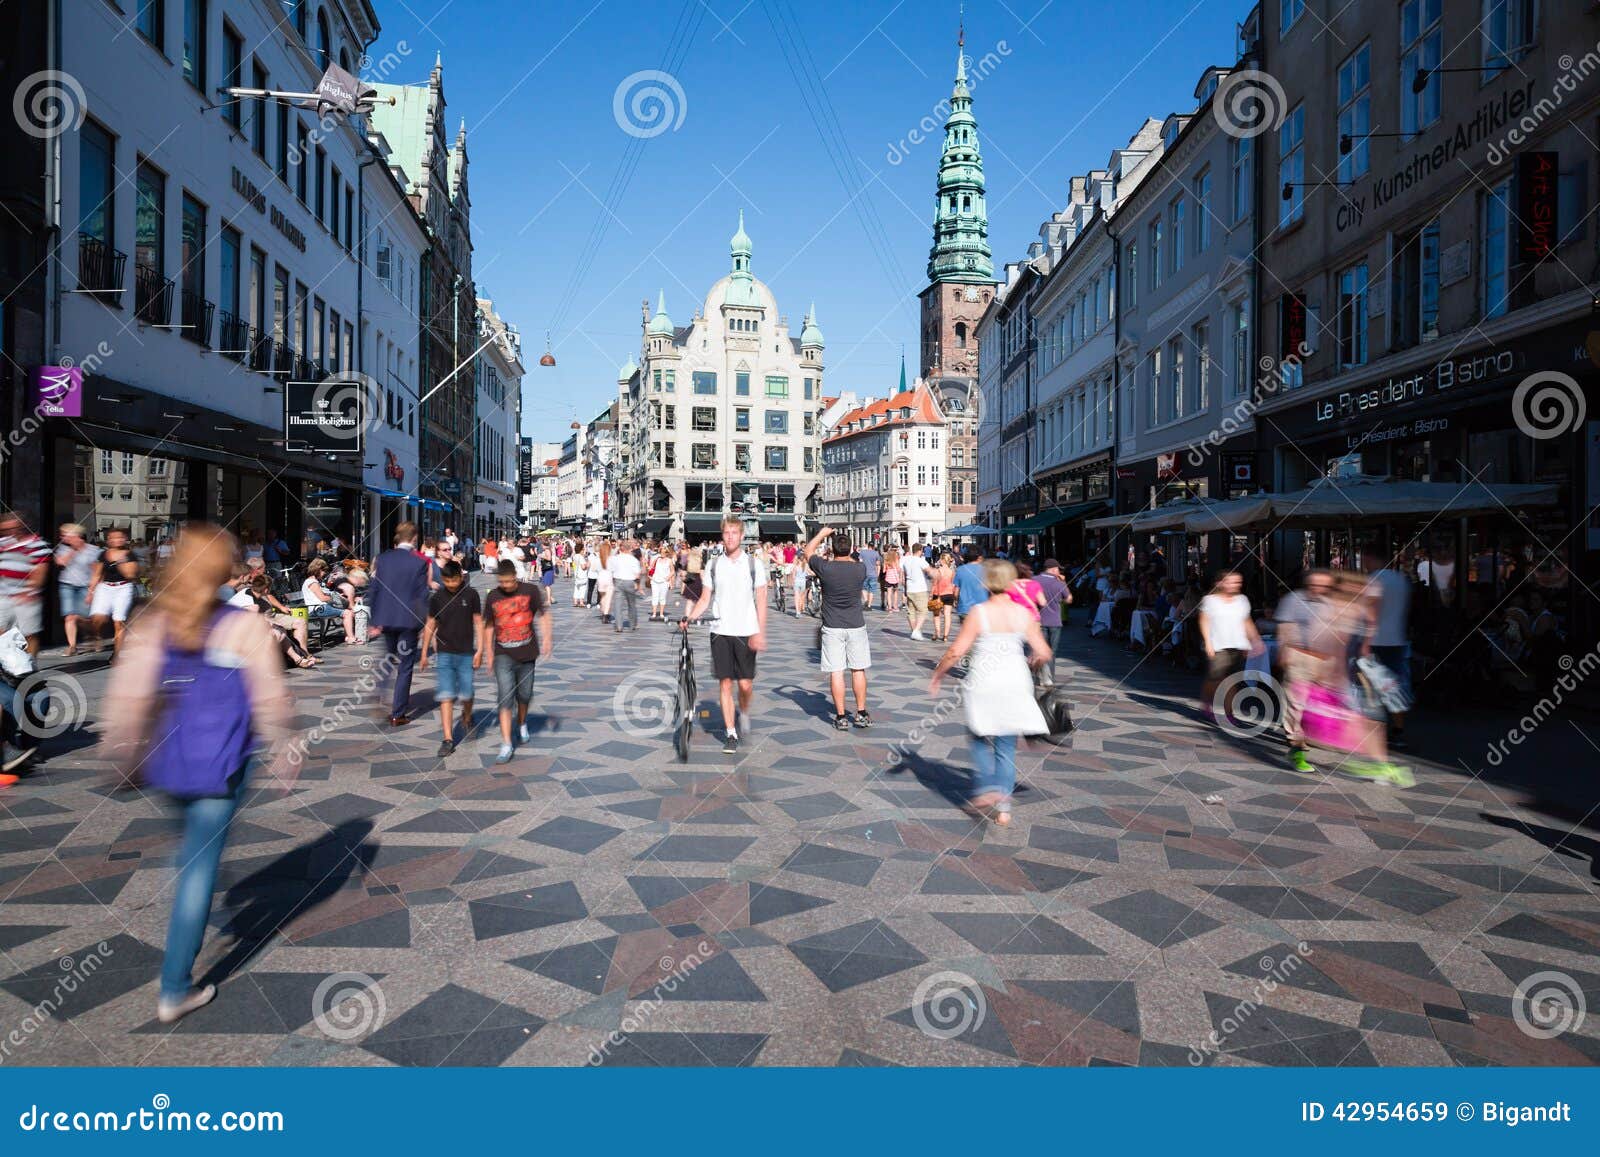 Pedestrians Editorial Stock Image - Image: 42954659